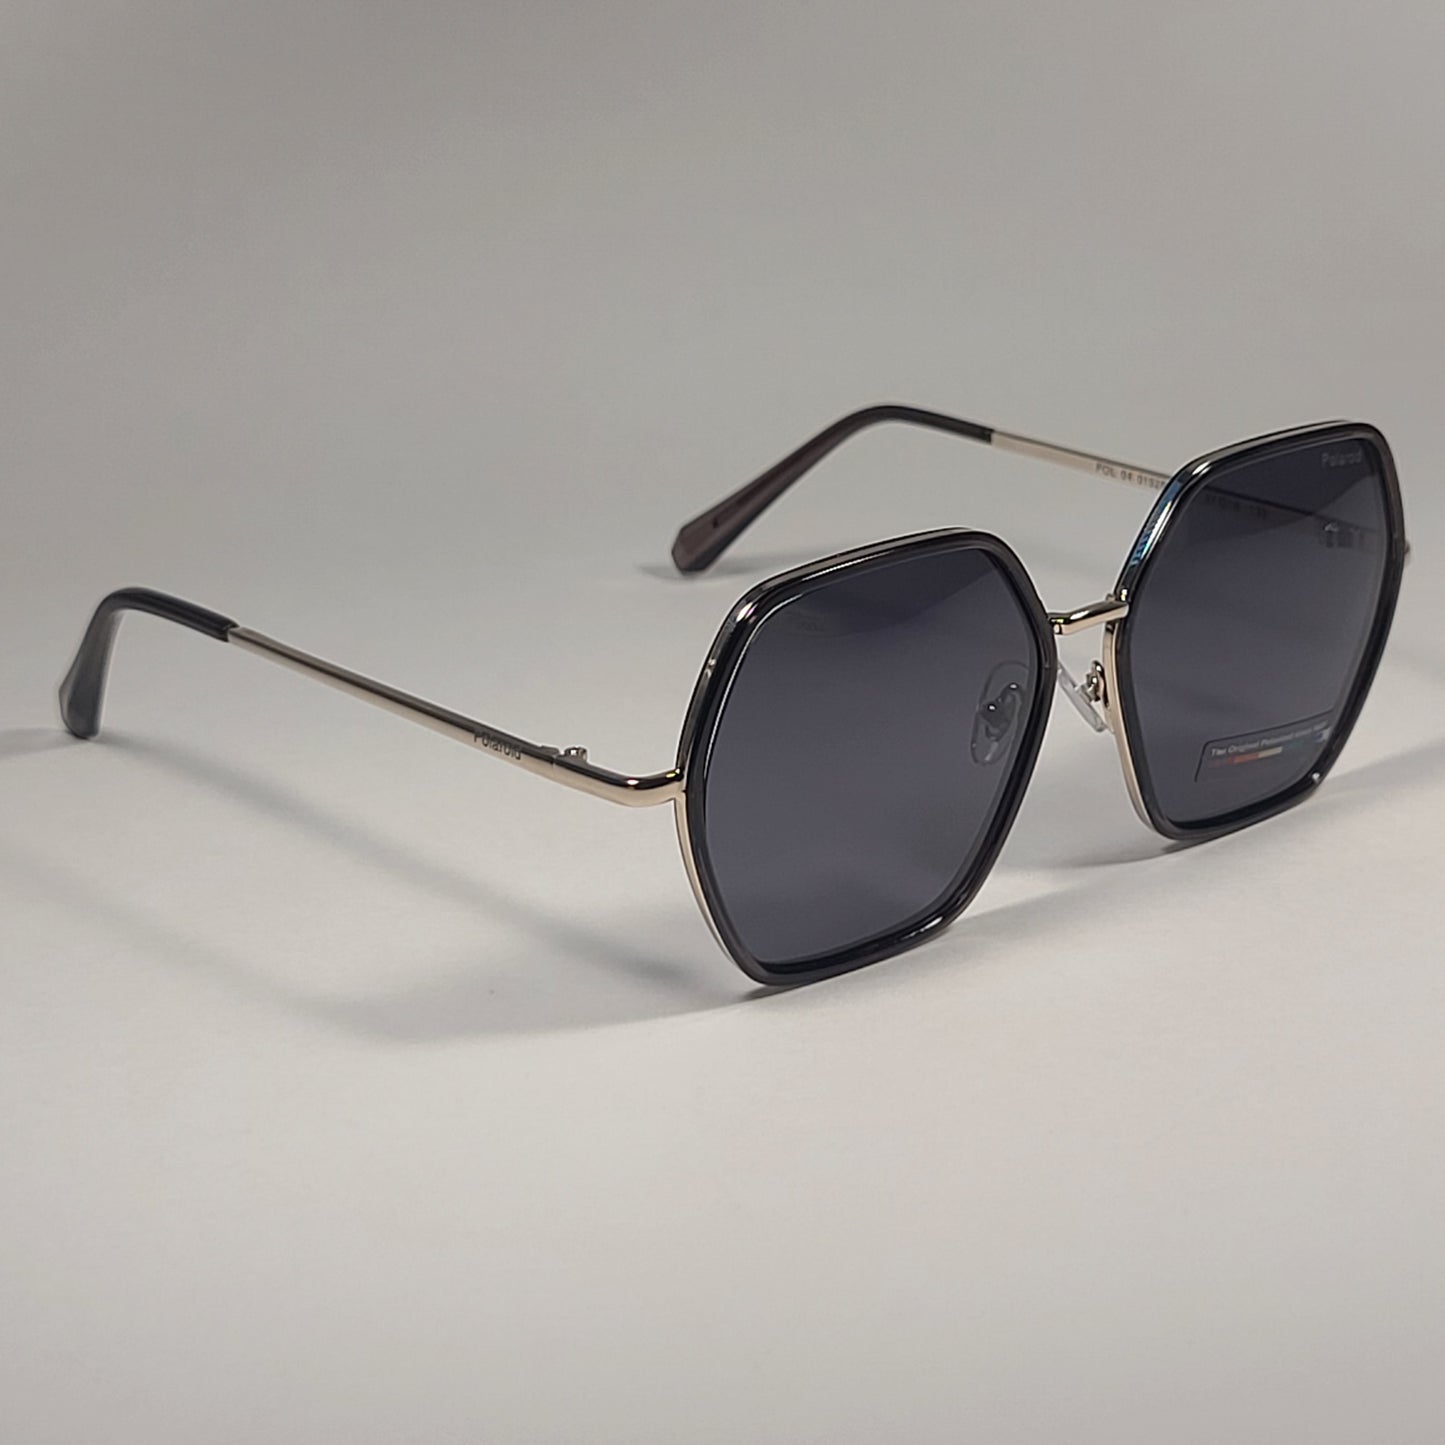 Polaroid Polarized Hexagon Sunglasses Black Gold Gray Frame / Gray Lens POL 04 - Sunglasses